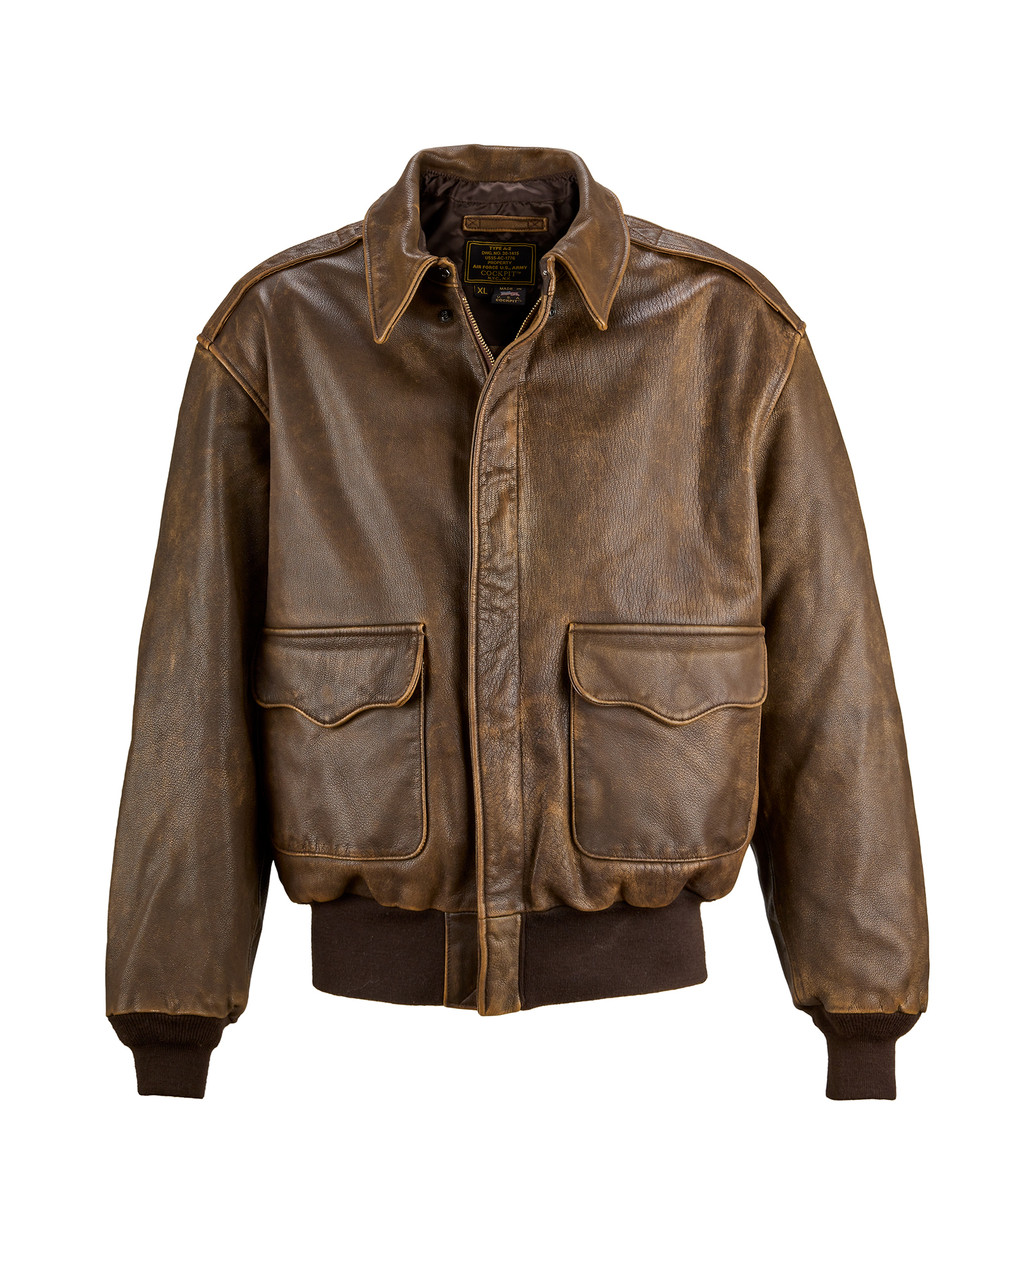 A2 Leather Jacket Men\'s Mustang Flight